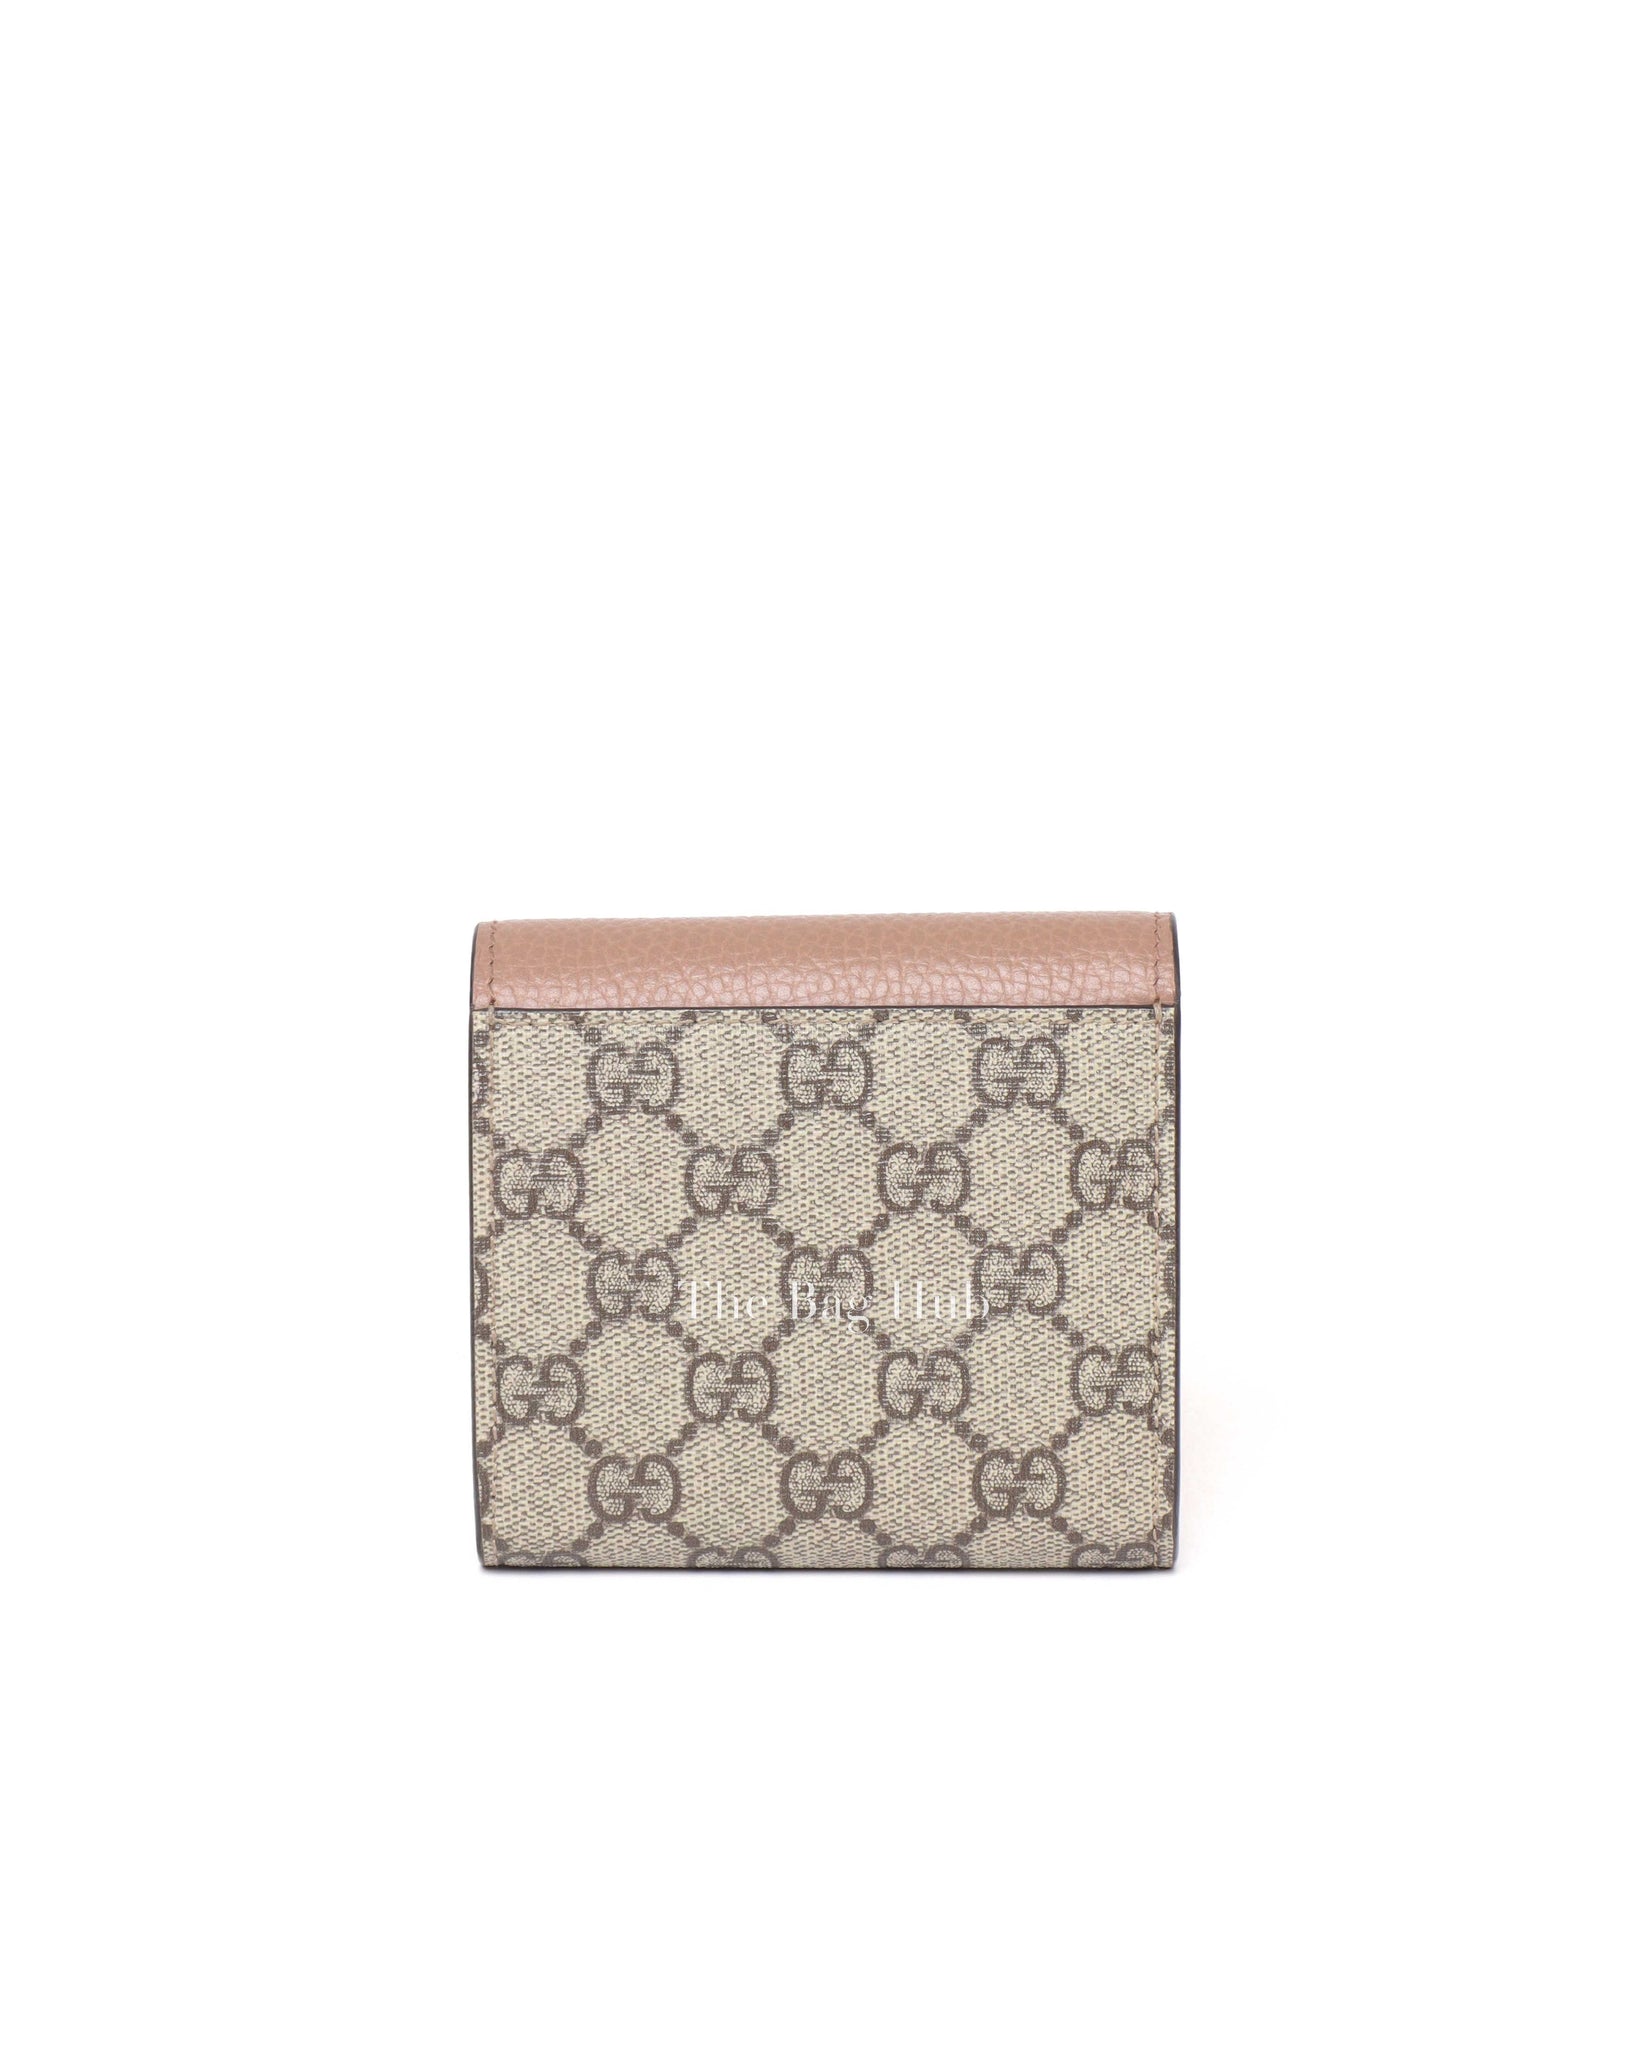 Gucci Rose/Beige Ebony GG Supreme Marmont Medium Wallet-3